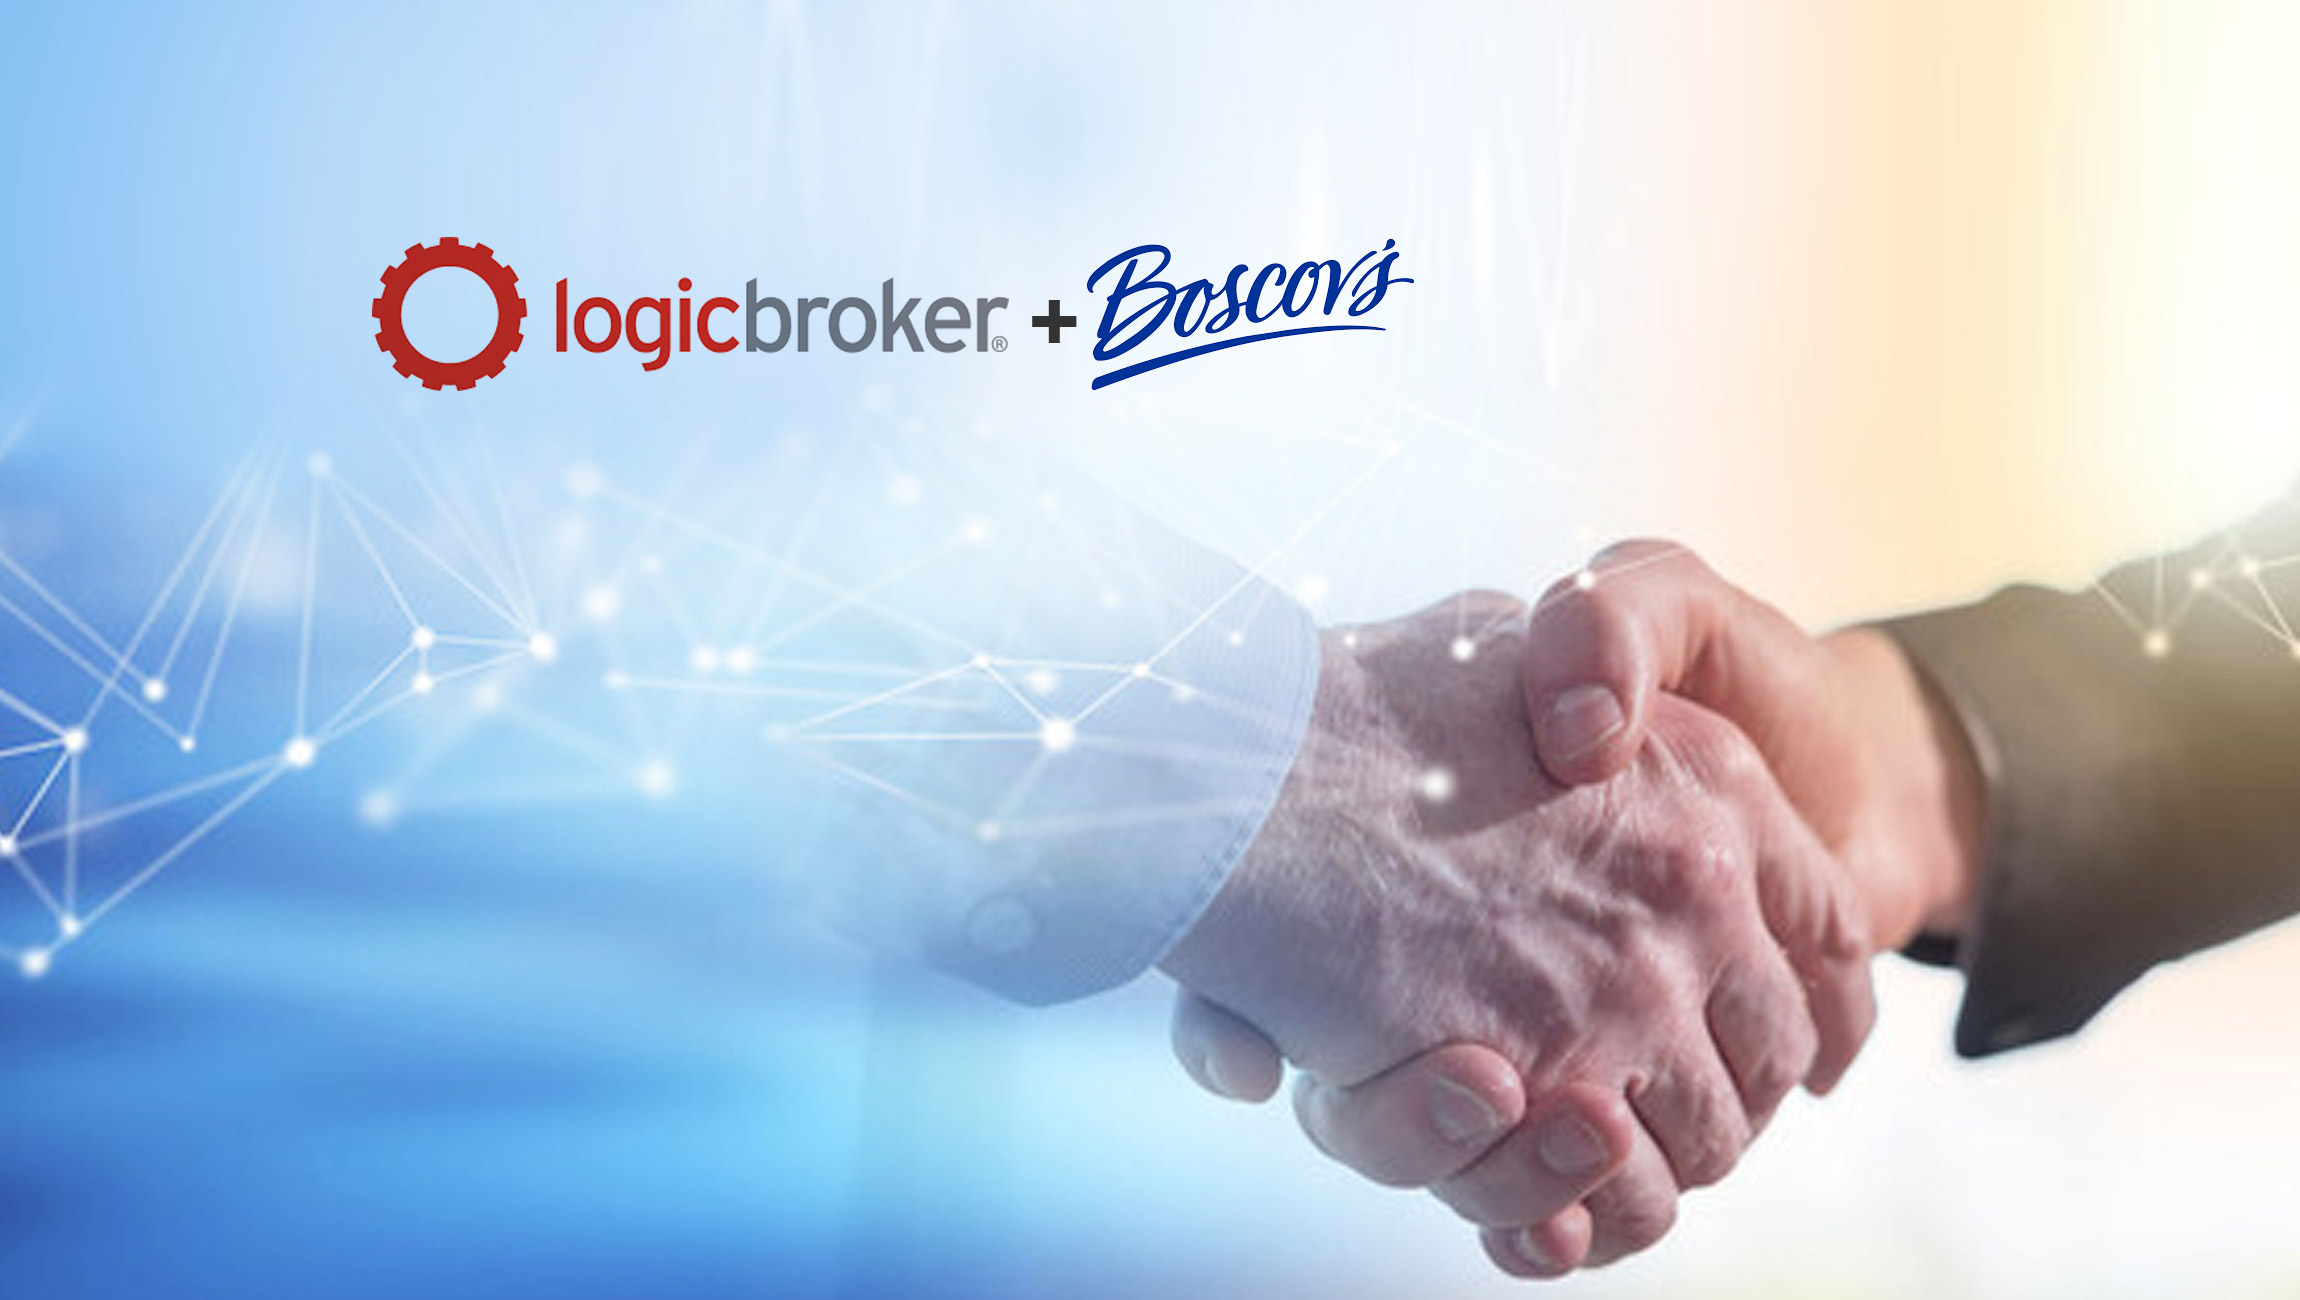 Logicbroker and Boscov’s Announce Partnership to Expand Drop Ship Program